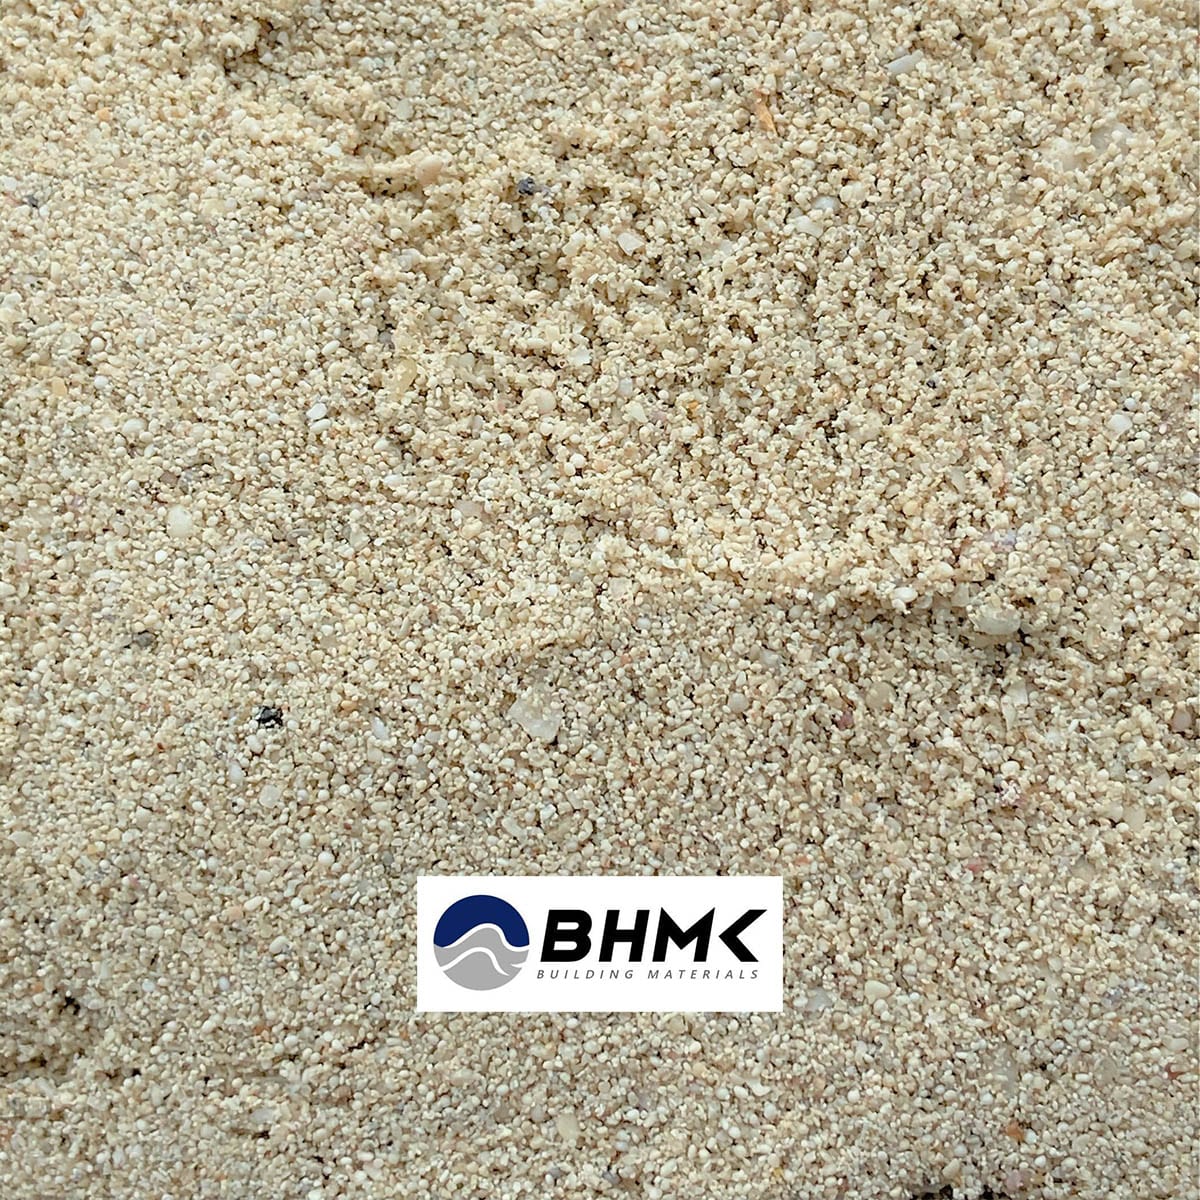 Washed sand bhmk play sand sea sand beach sand white sand best quality Dubai Sharjah Abu Dhabi UAE BHMK sand supplier 2